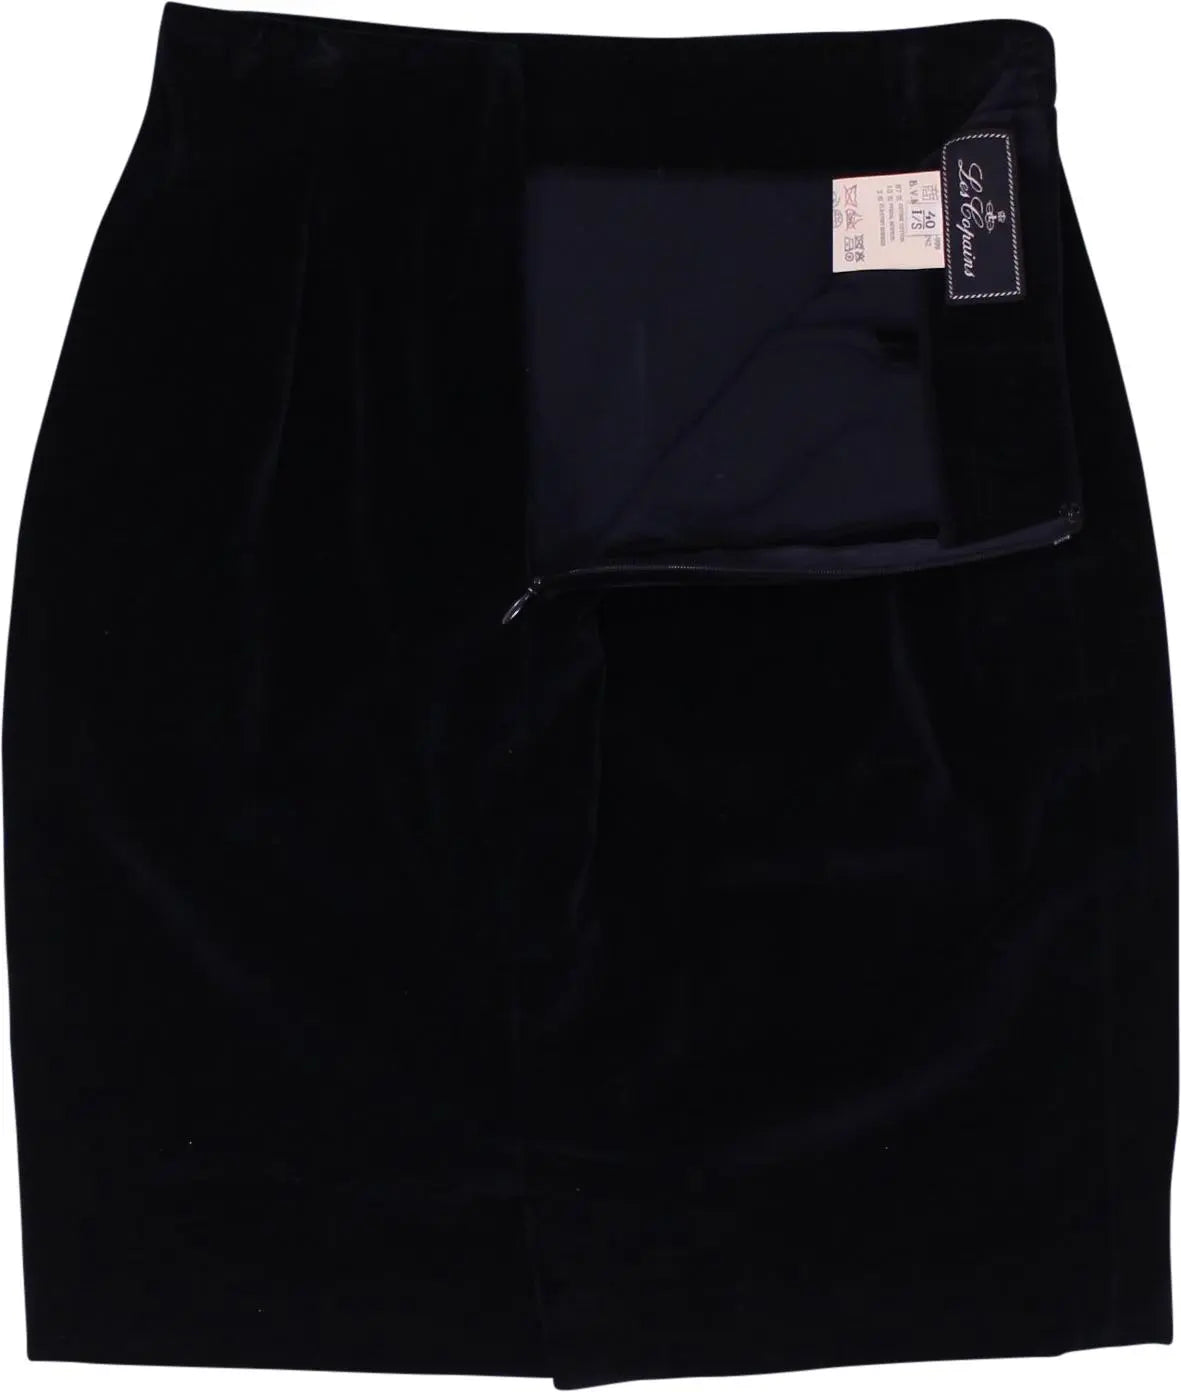 Les Copains - Velvet Skirt by Les Copains- ThriftTale.com - Vintage and second handclothing